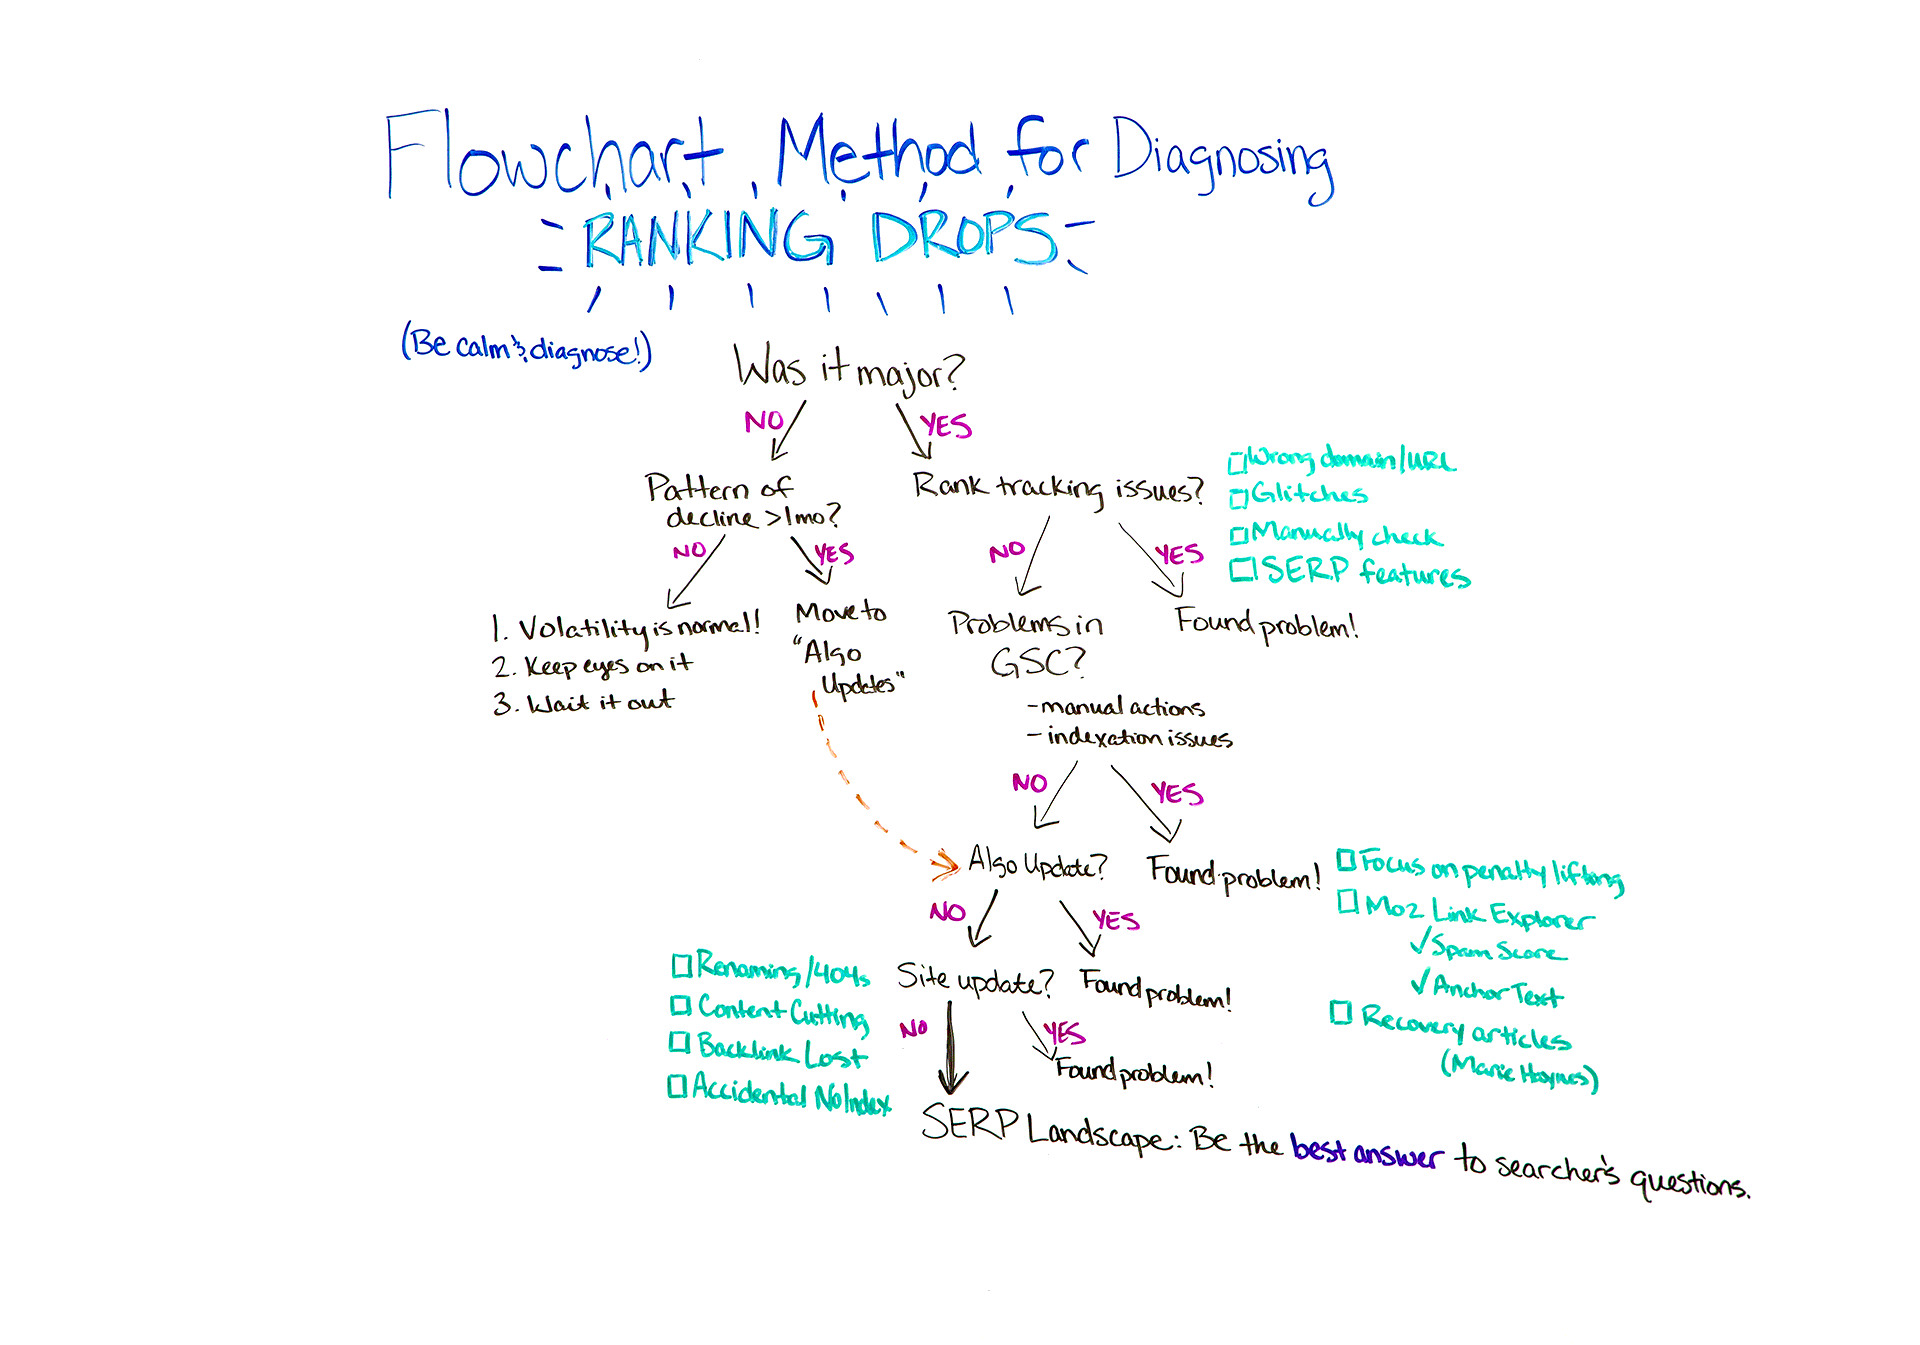 Flowchart method for diagnosing ranking drops